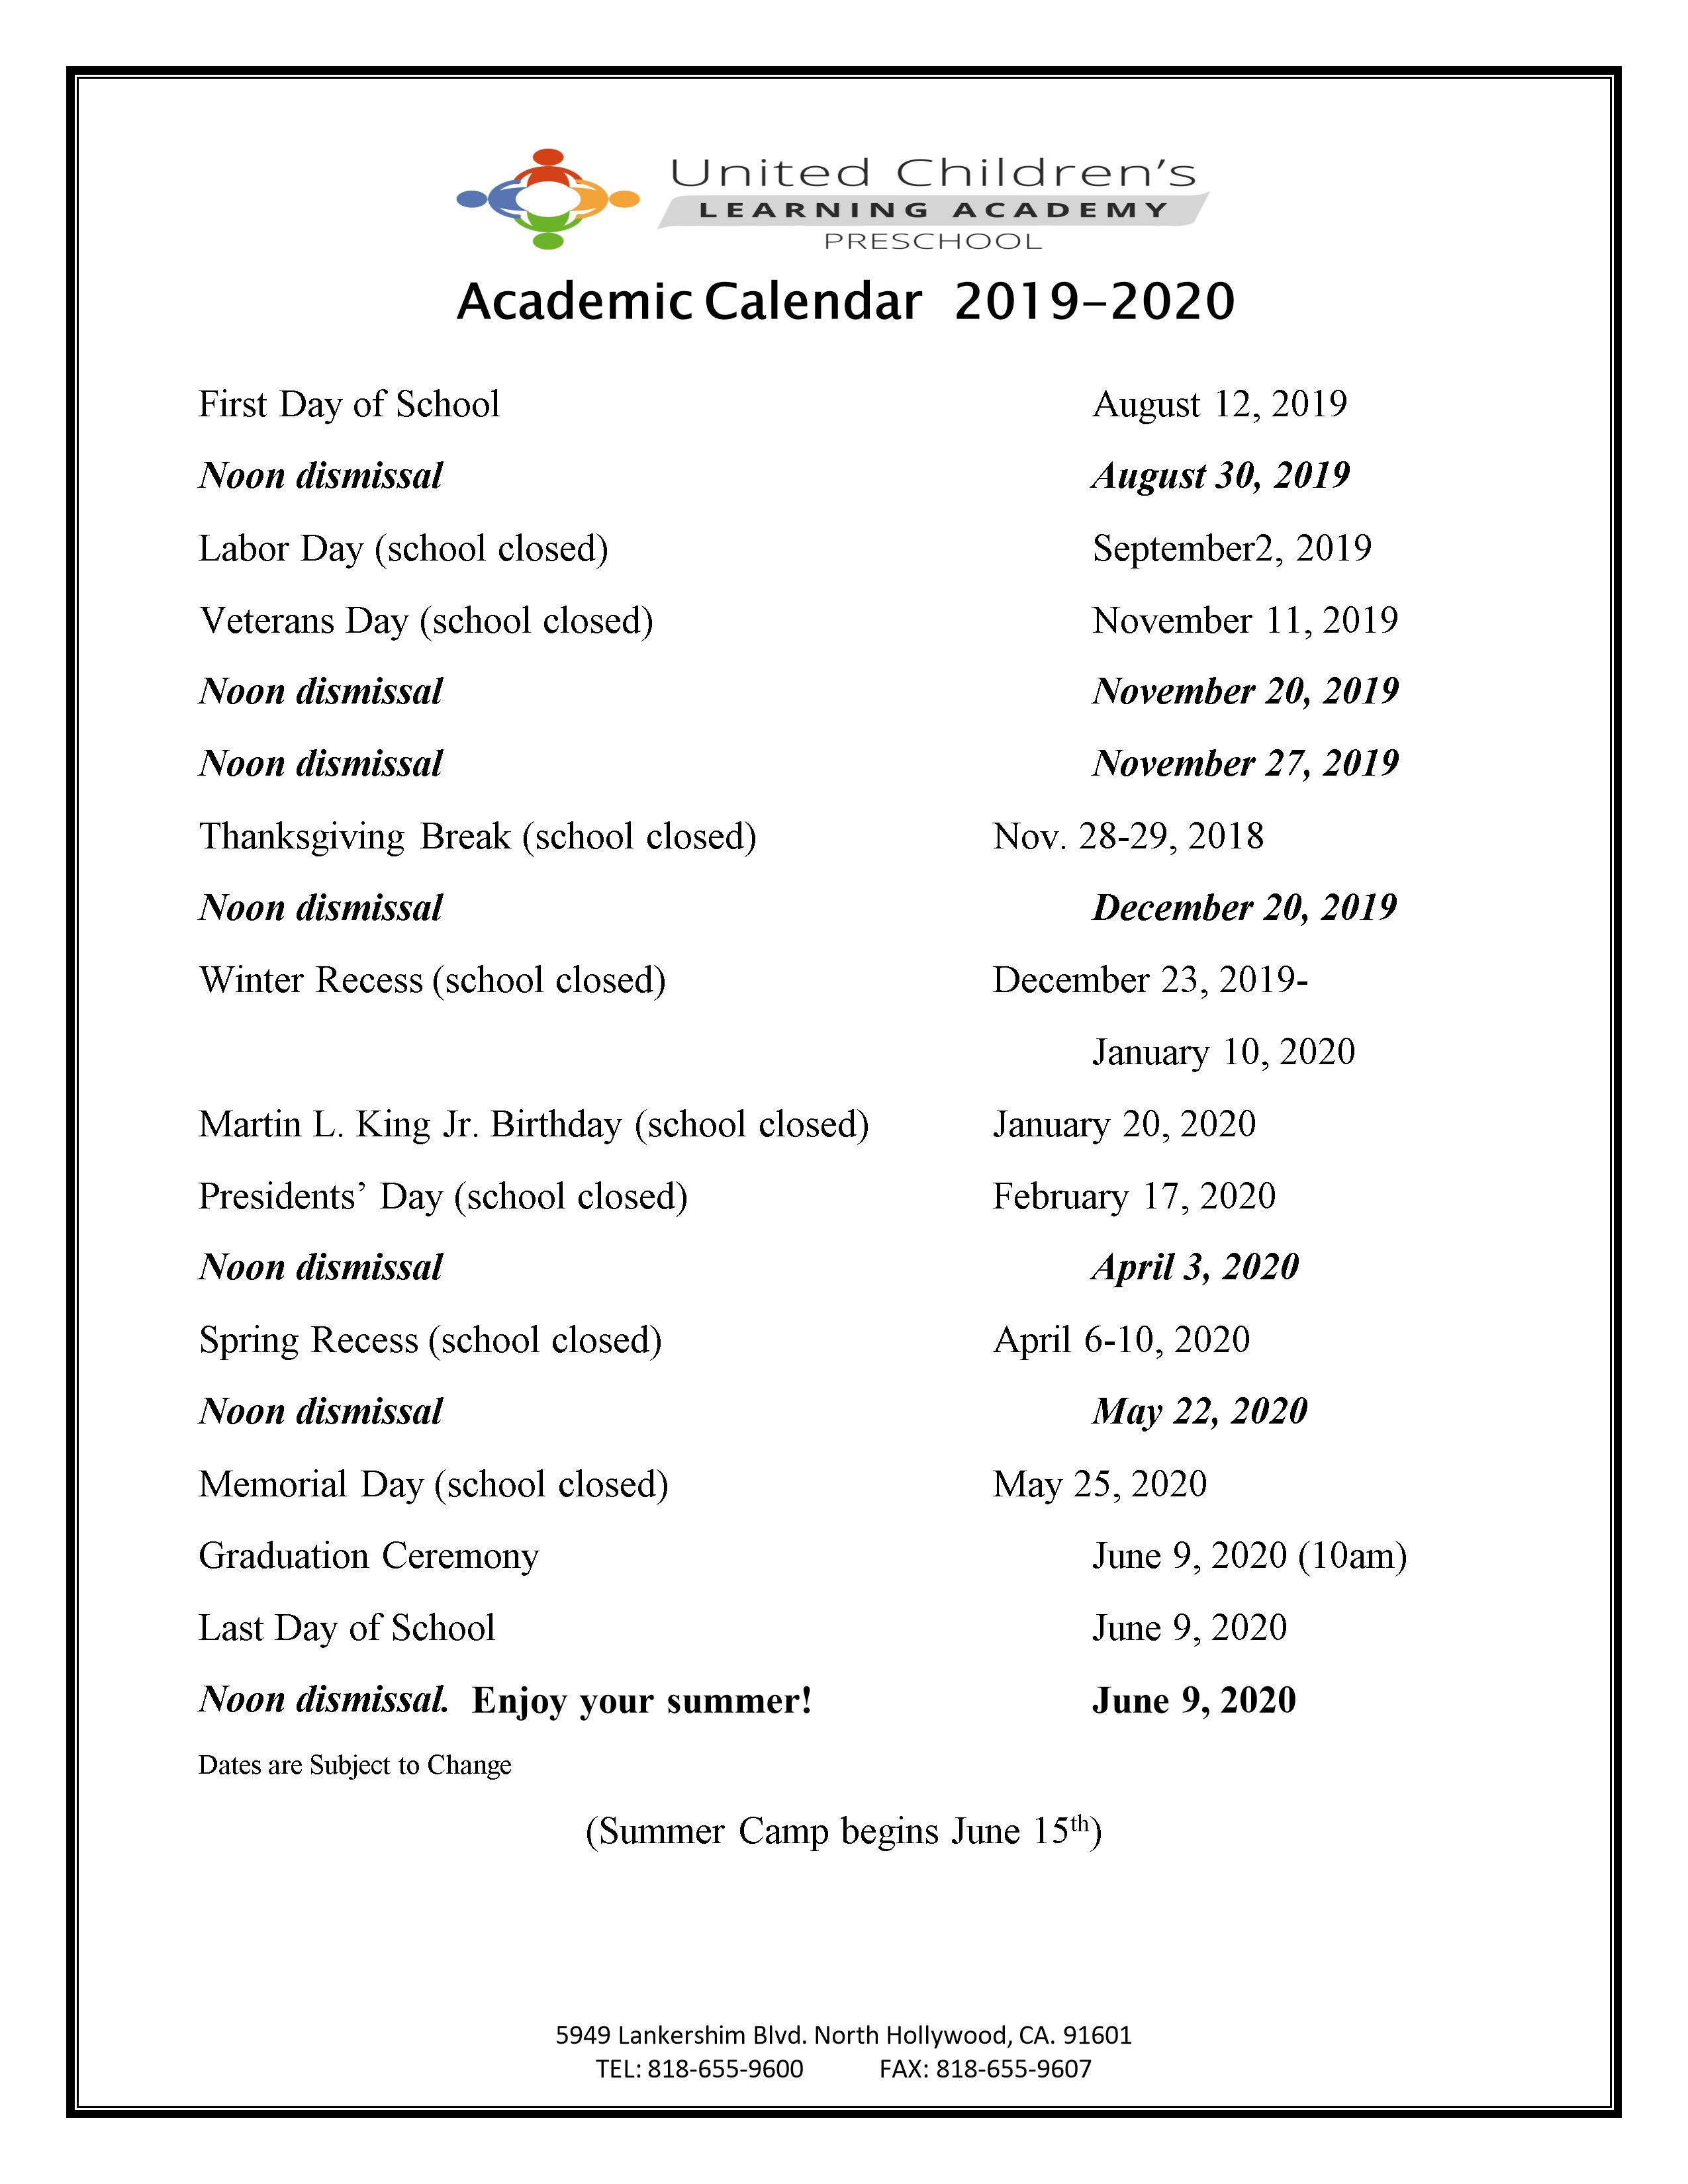 United Children's Learning Academy Calendar